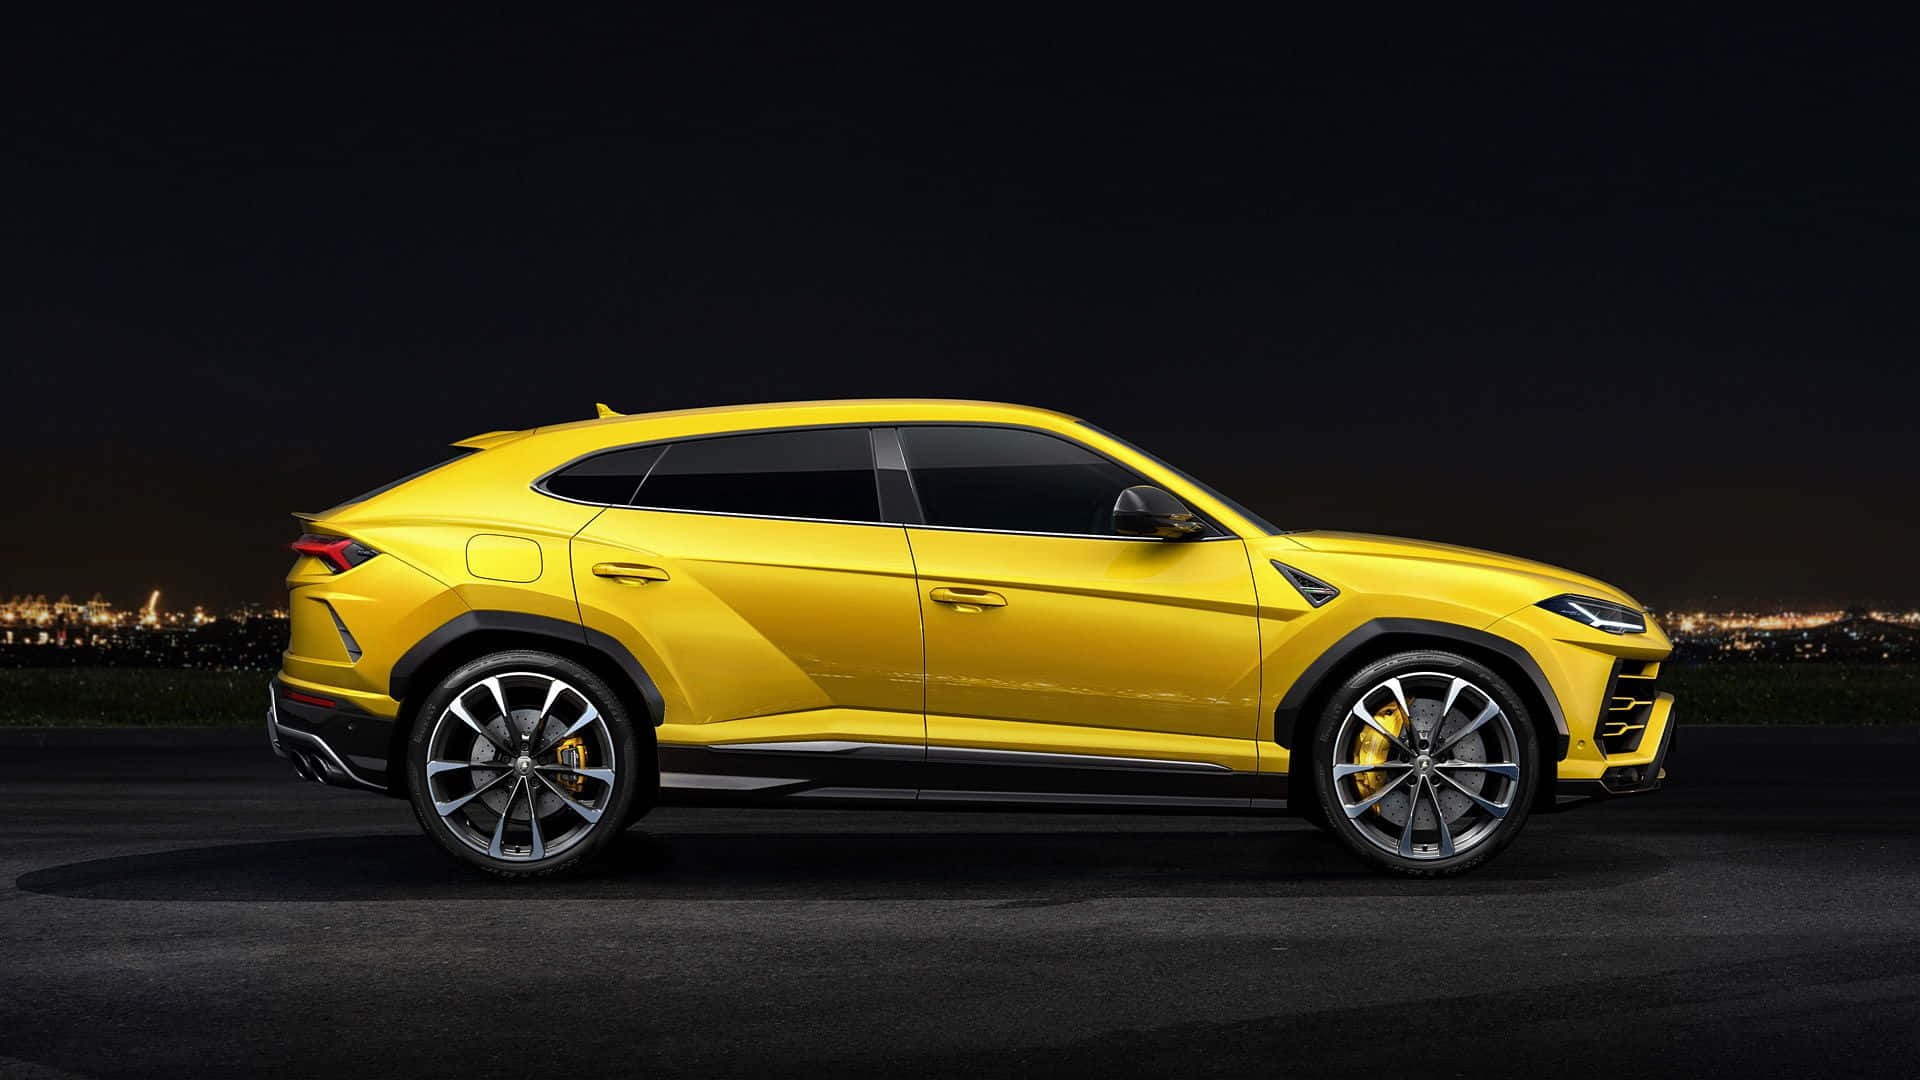 Sleek and Powerful Lamborghini Urus in Stunning Scenery Wallpaper